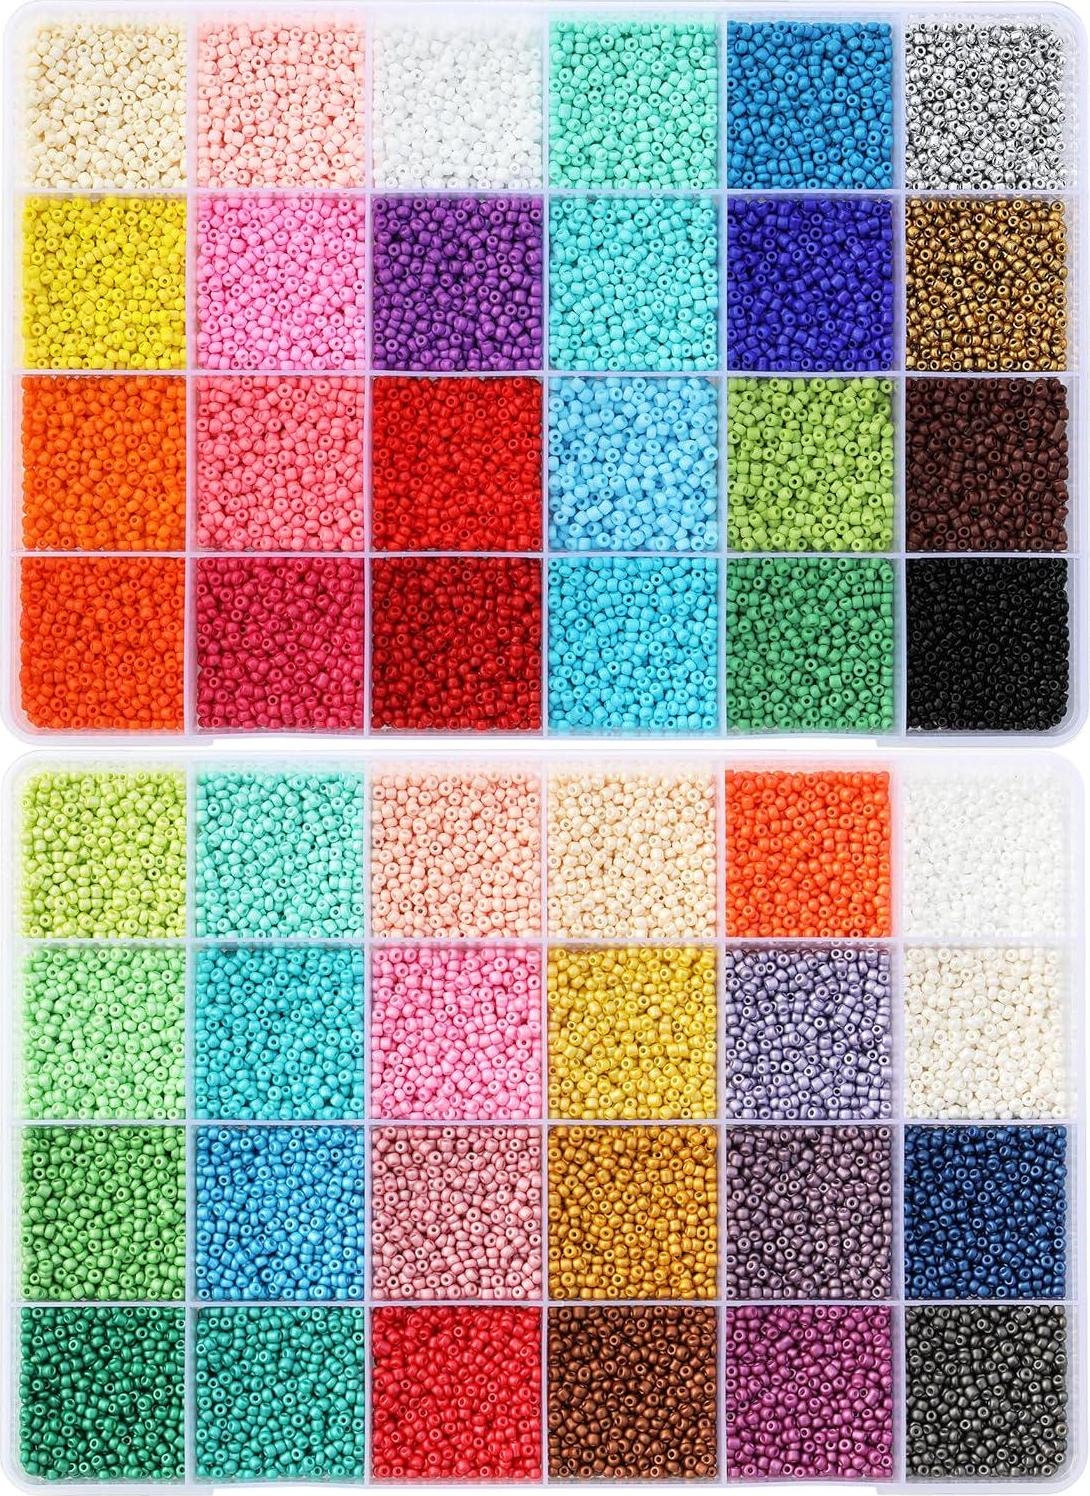 40000pcs 2mm Glass Seed Beads for Jewelry Making Kit Bracelets Storage Box